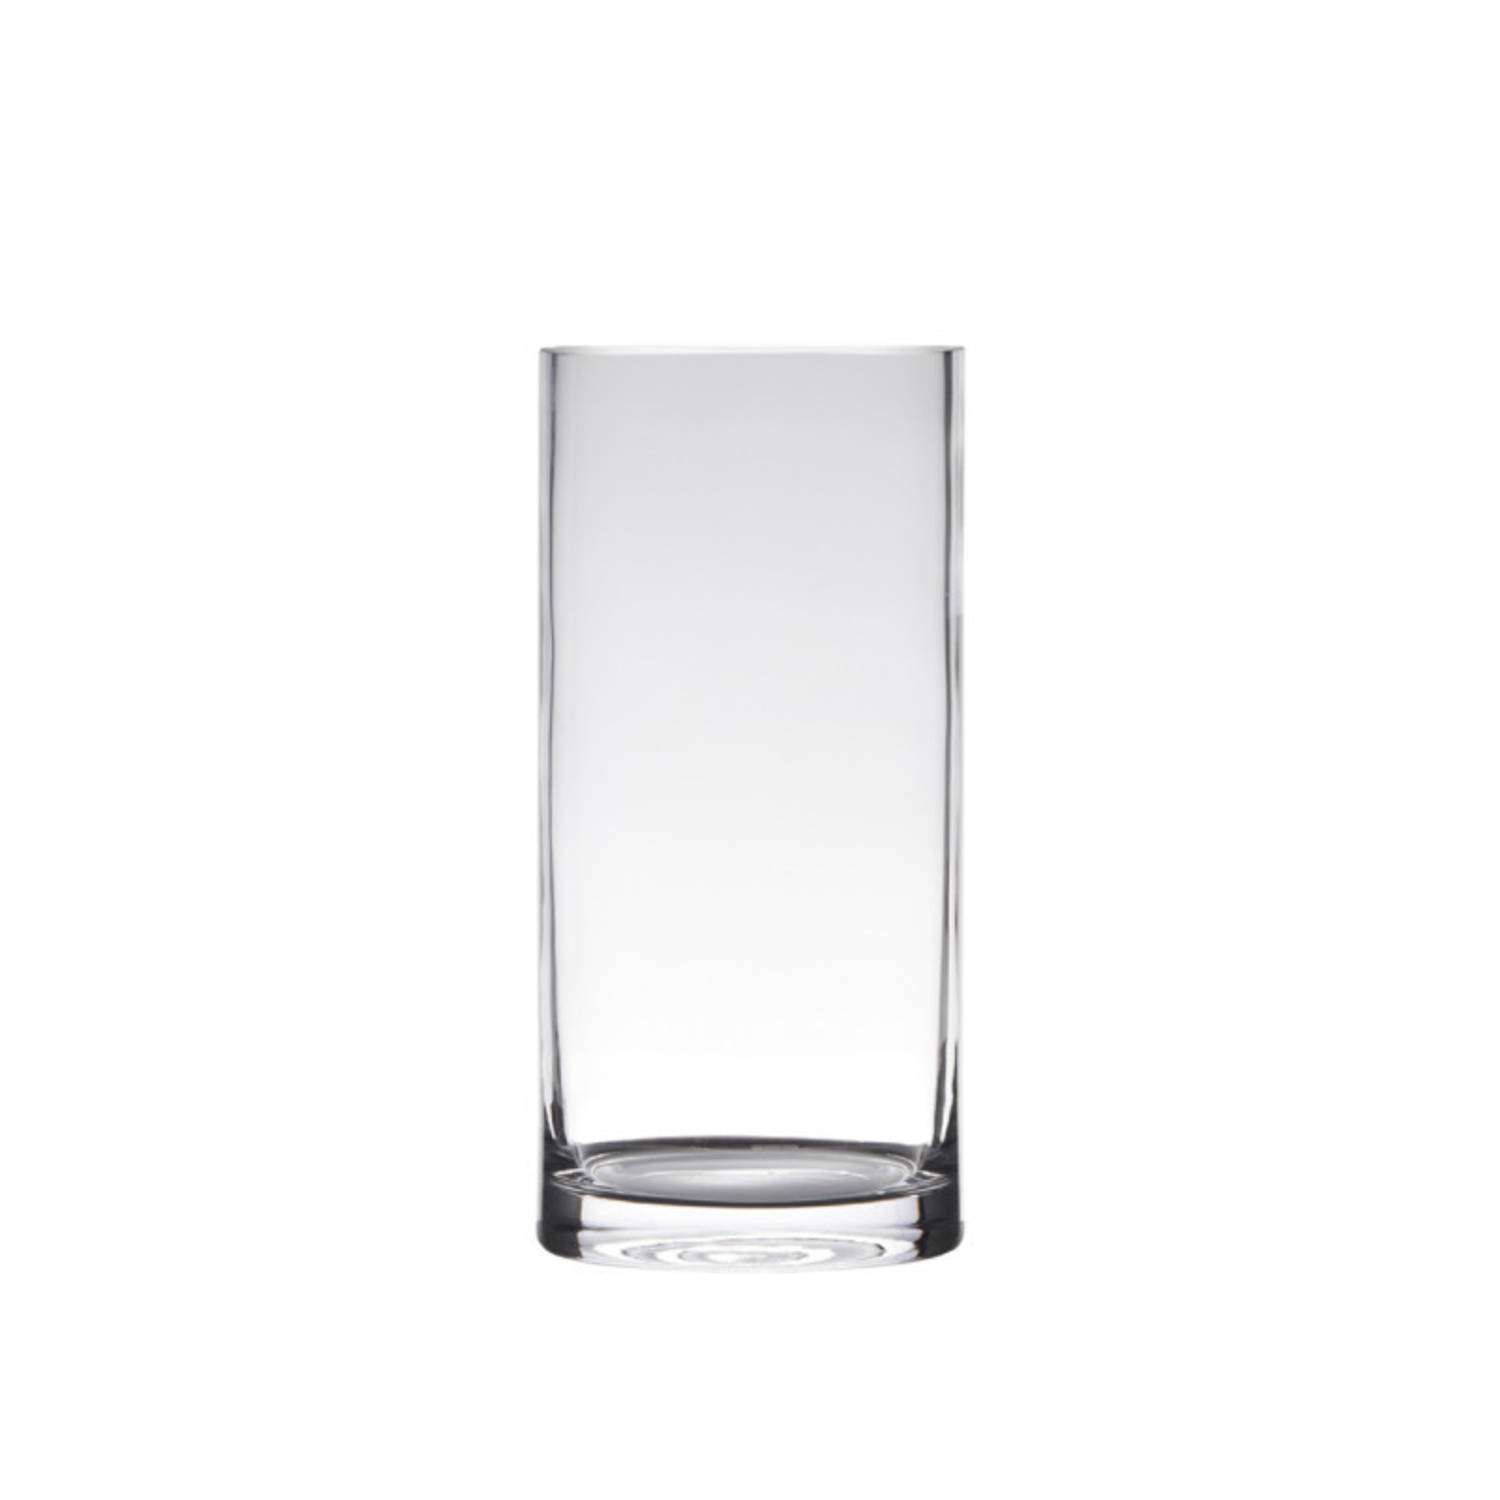 Transparante Home-basics Cylinder Vorm Vaas-vazen Van Glas 40 X 12 Cm Vazen